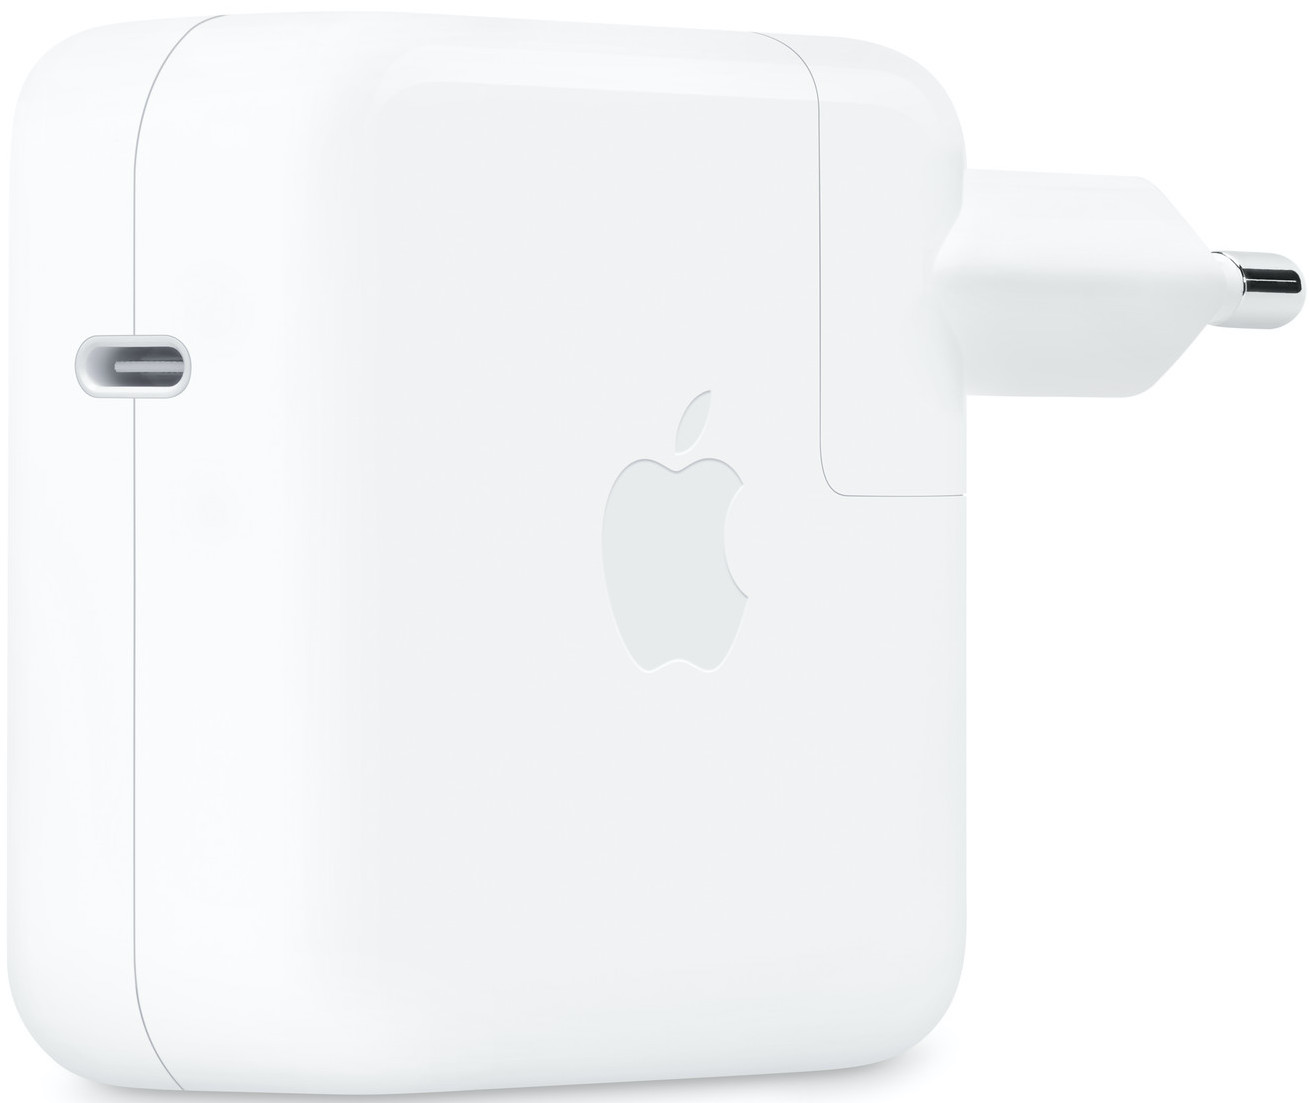 Адаптер питания Apple USB-C мощностью 96 Вт